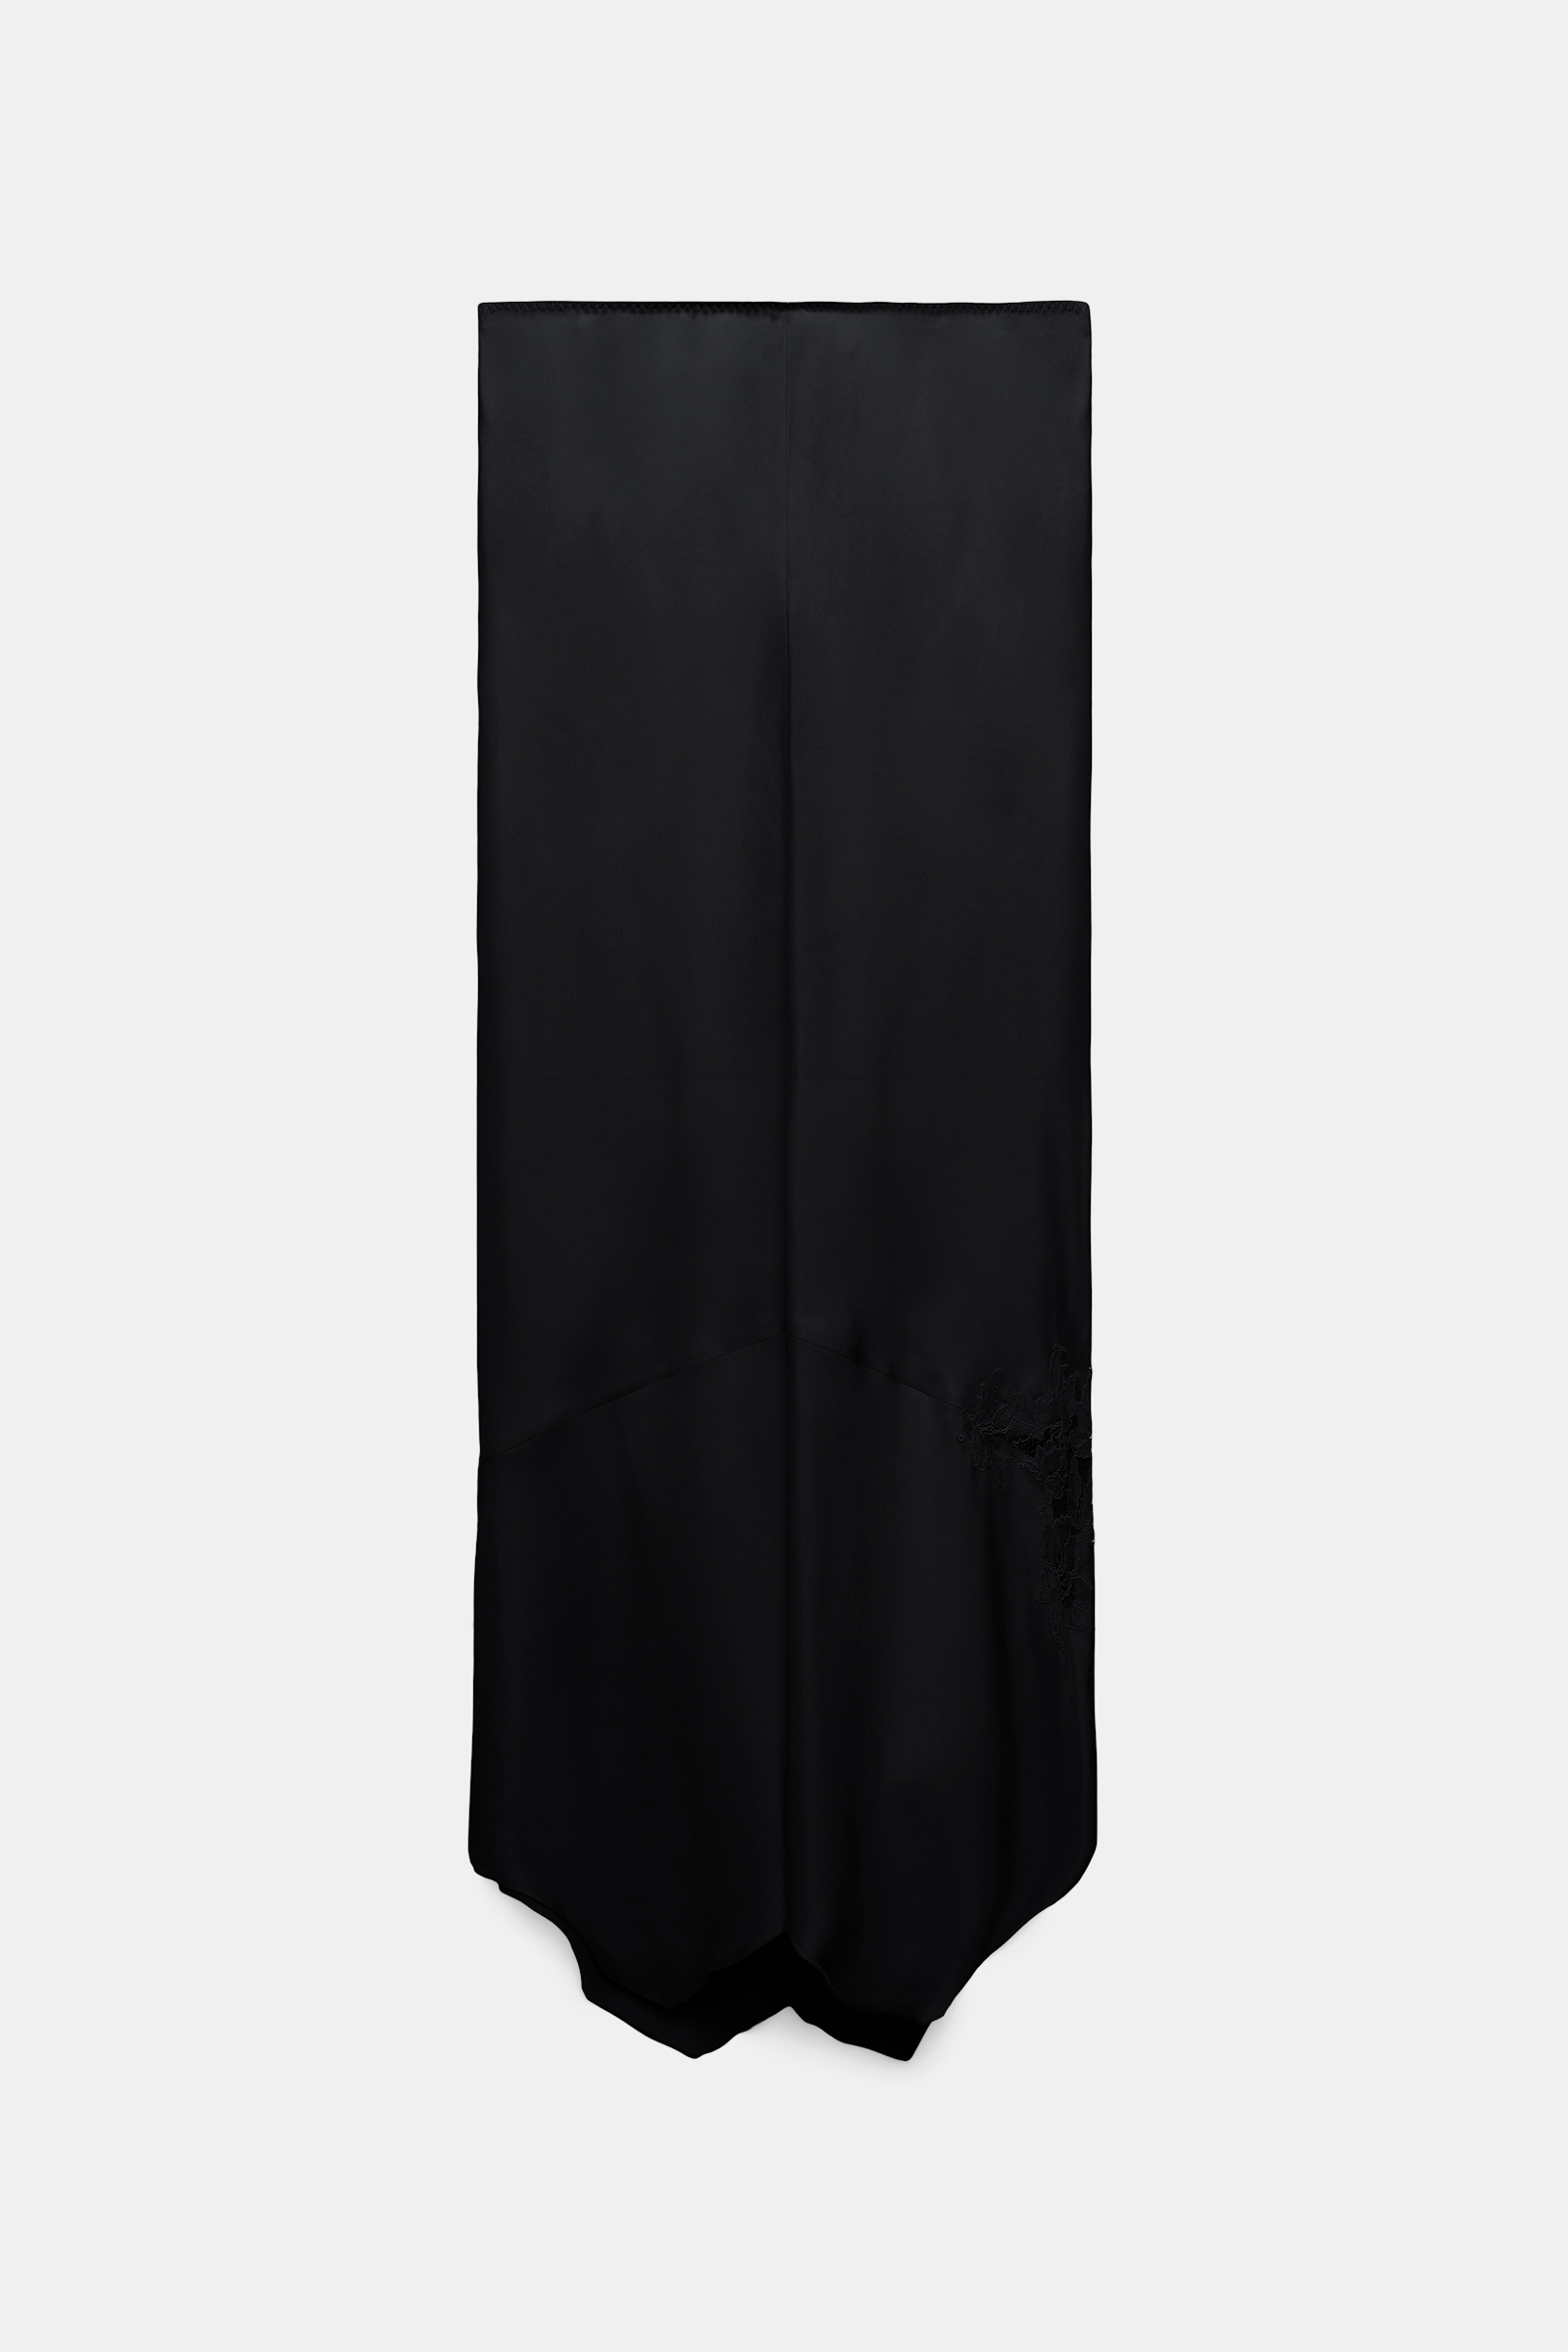 Dorothee Schumacher Silk twill lingerie skirt with an asymmetric lace insert pure black